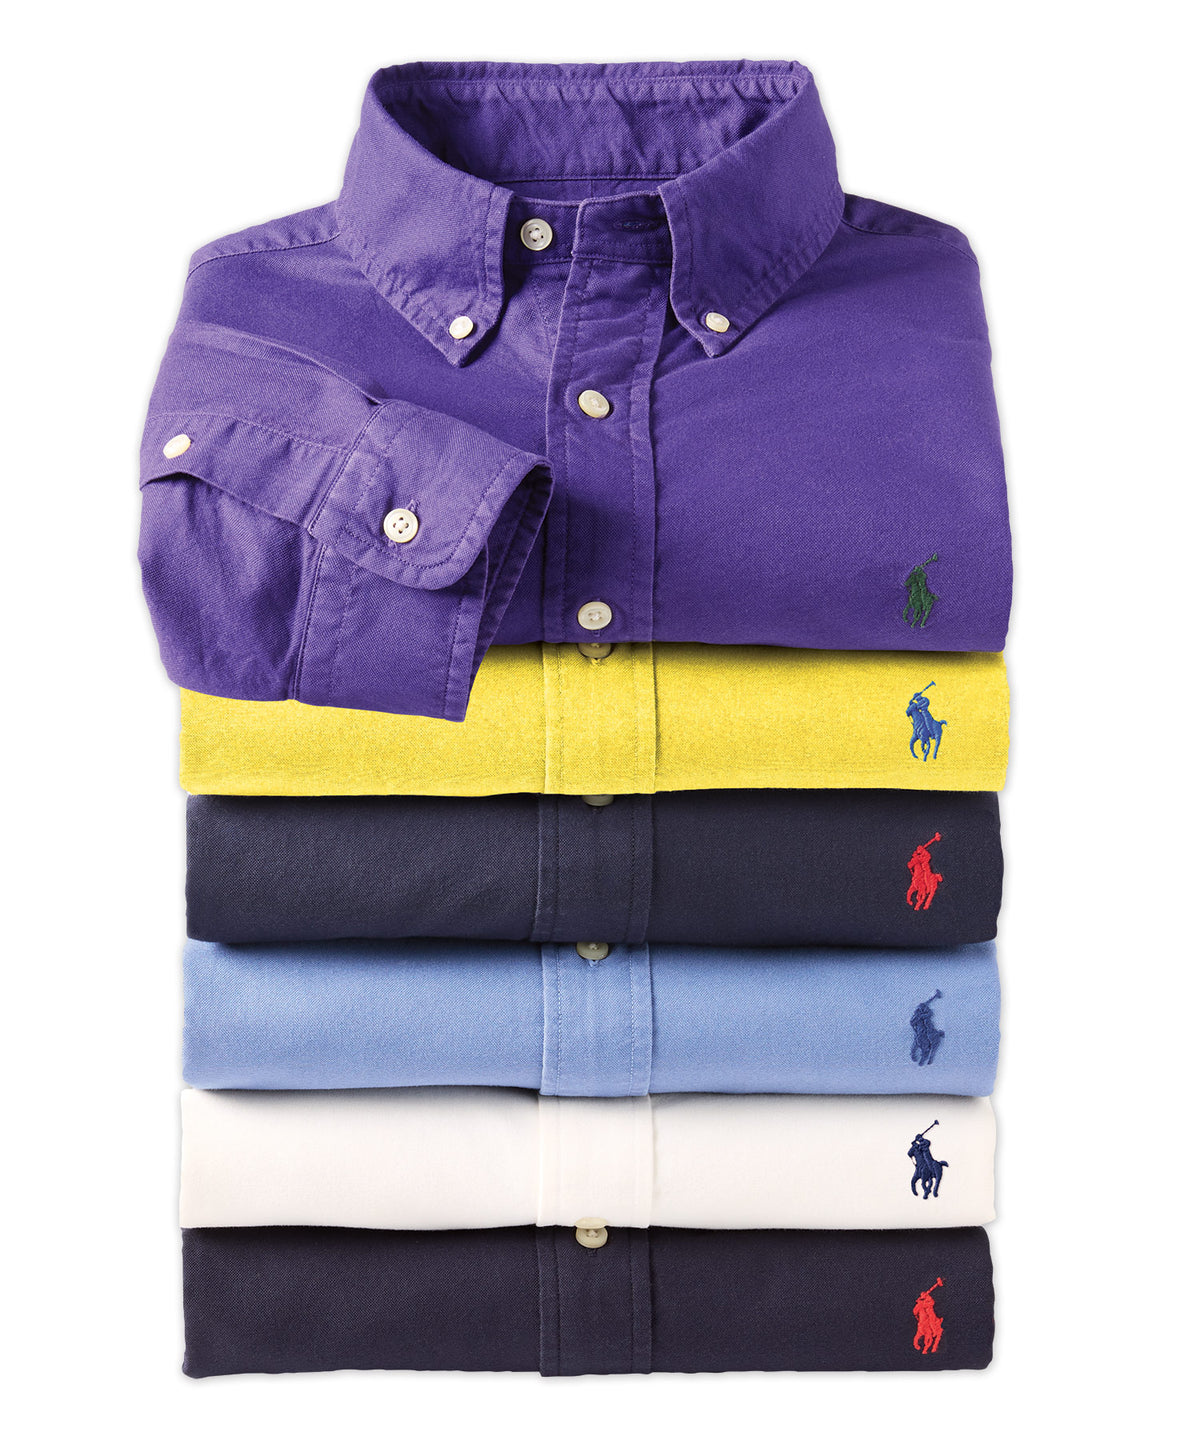 Polo by Ralph Lauren, Shirts, Polo Ralph Lauren Shirt Mens 3xb Blue Short  Sleeve Button Down Indigo Oxford